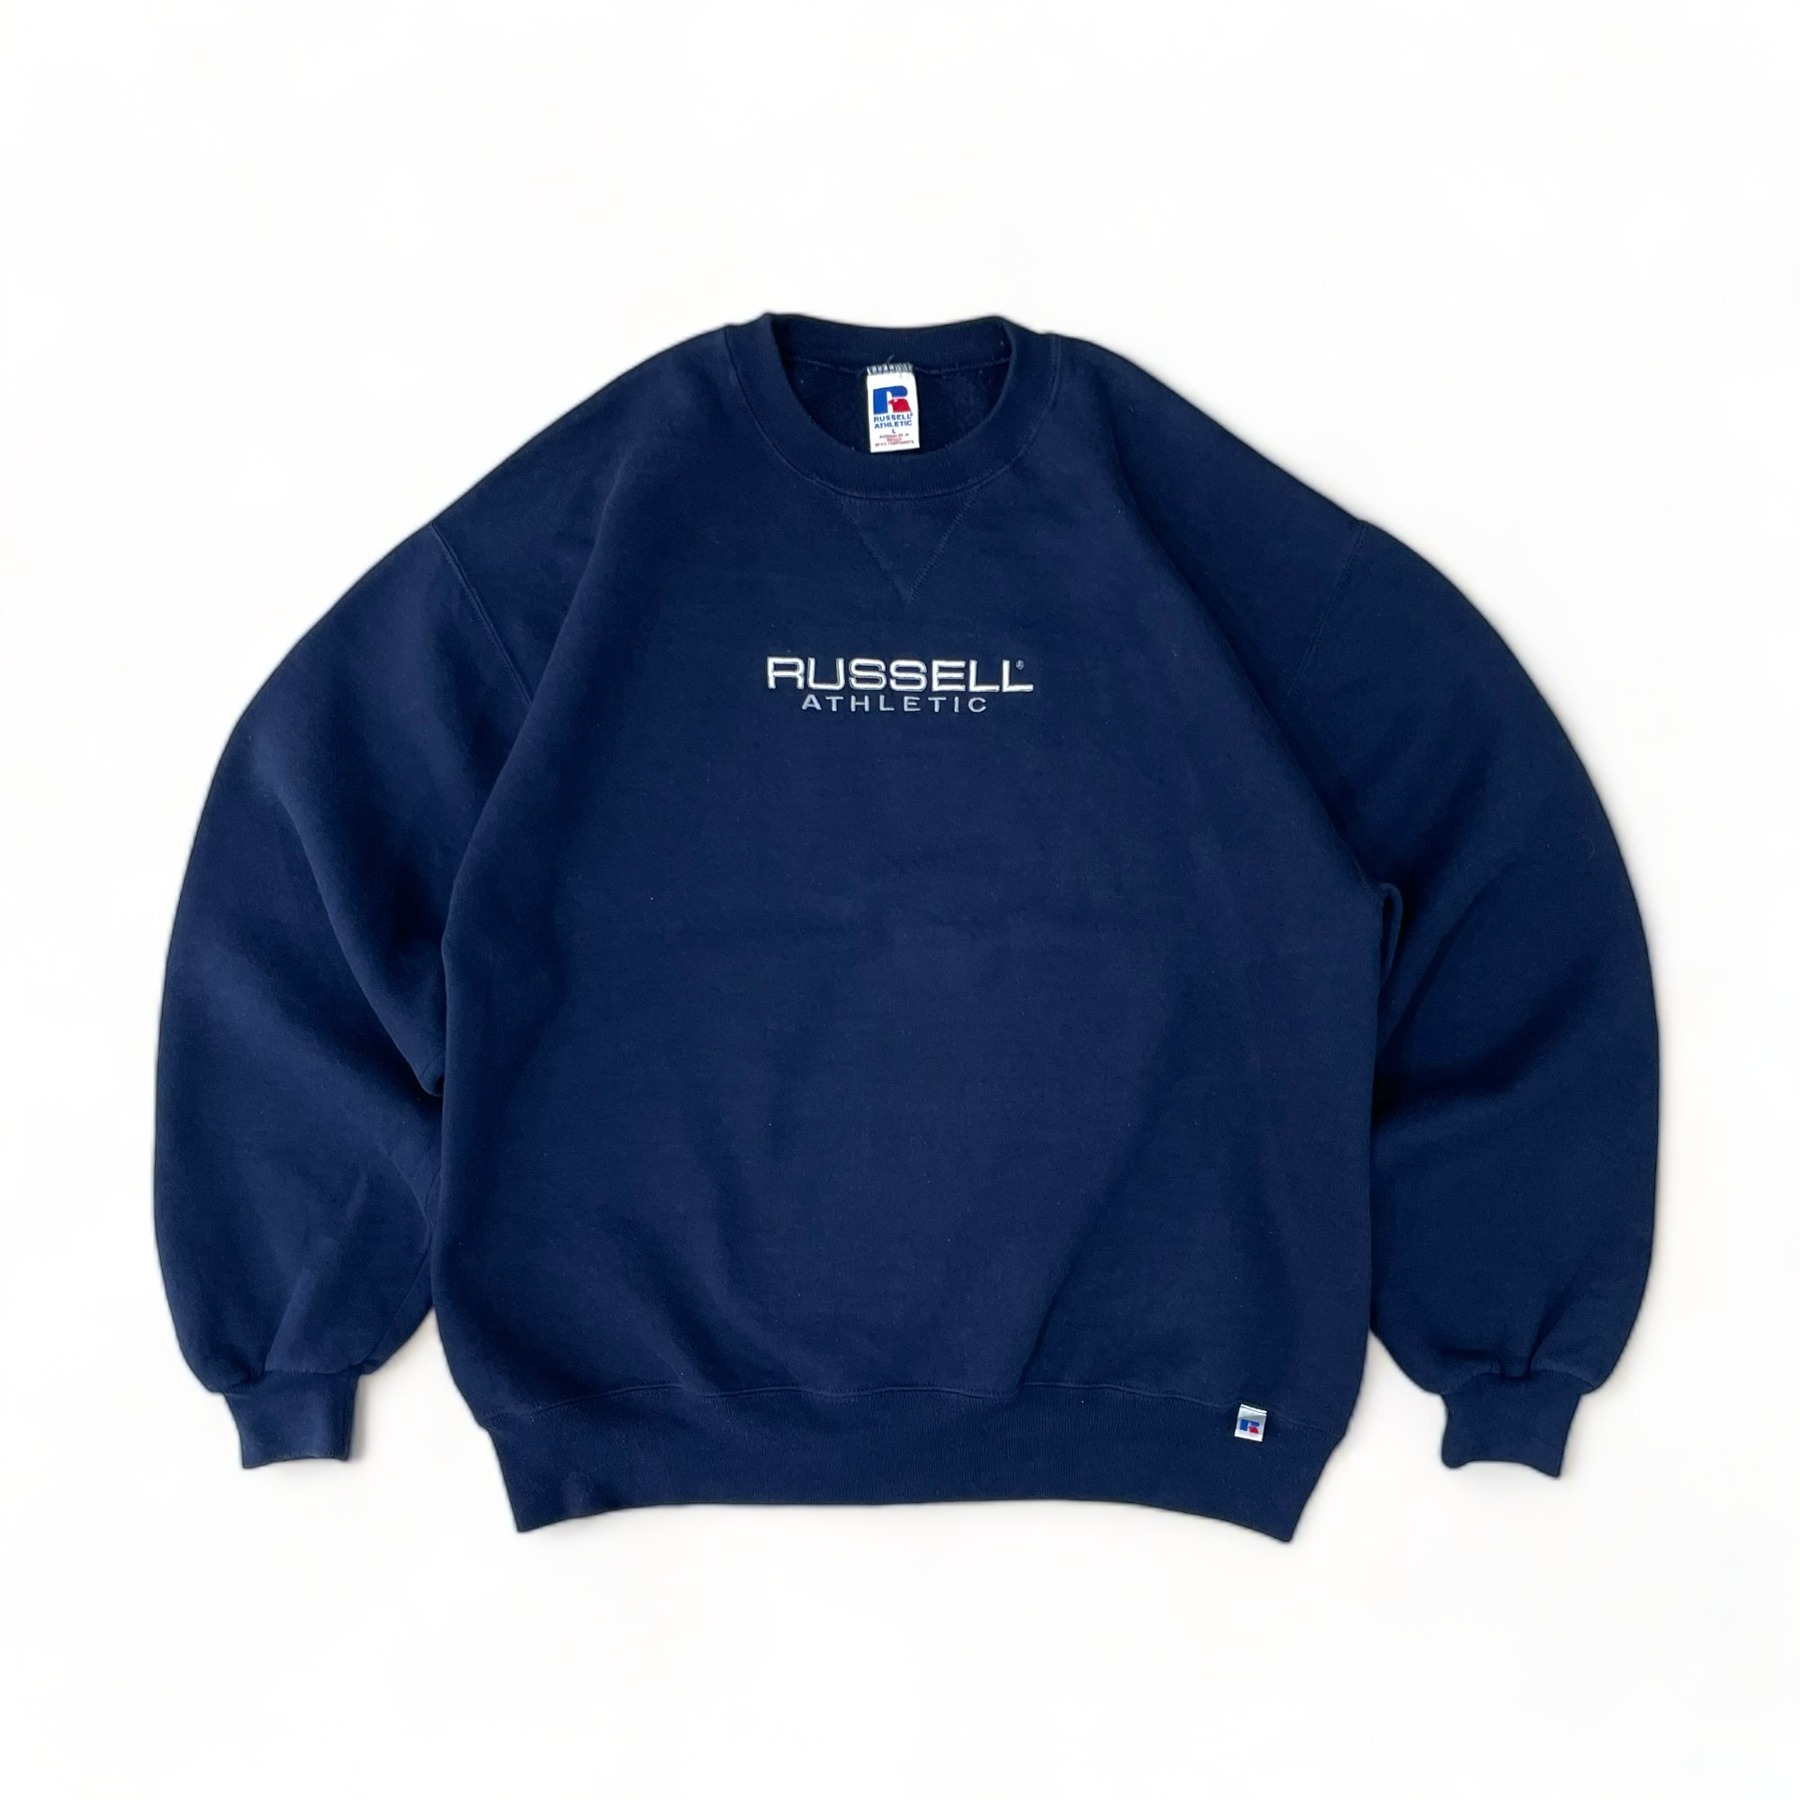 Vintage Russell Sweatshirt - L